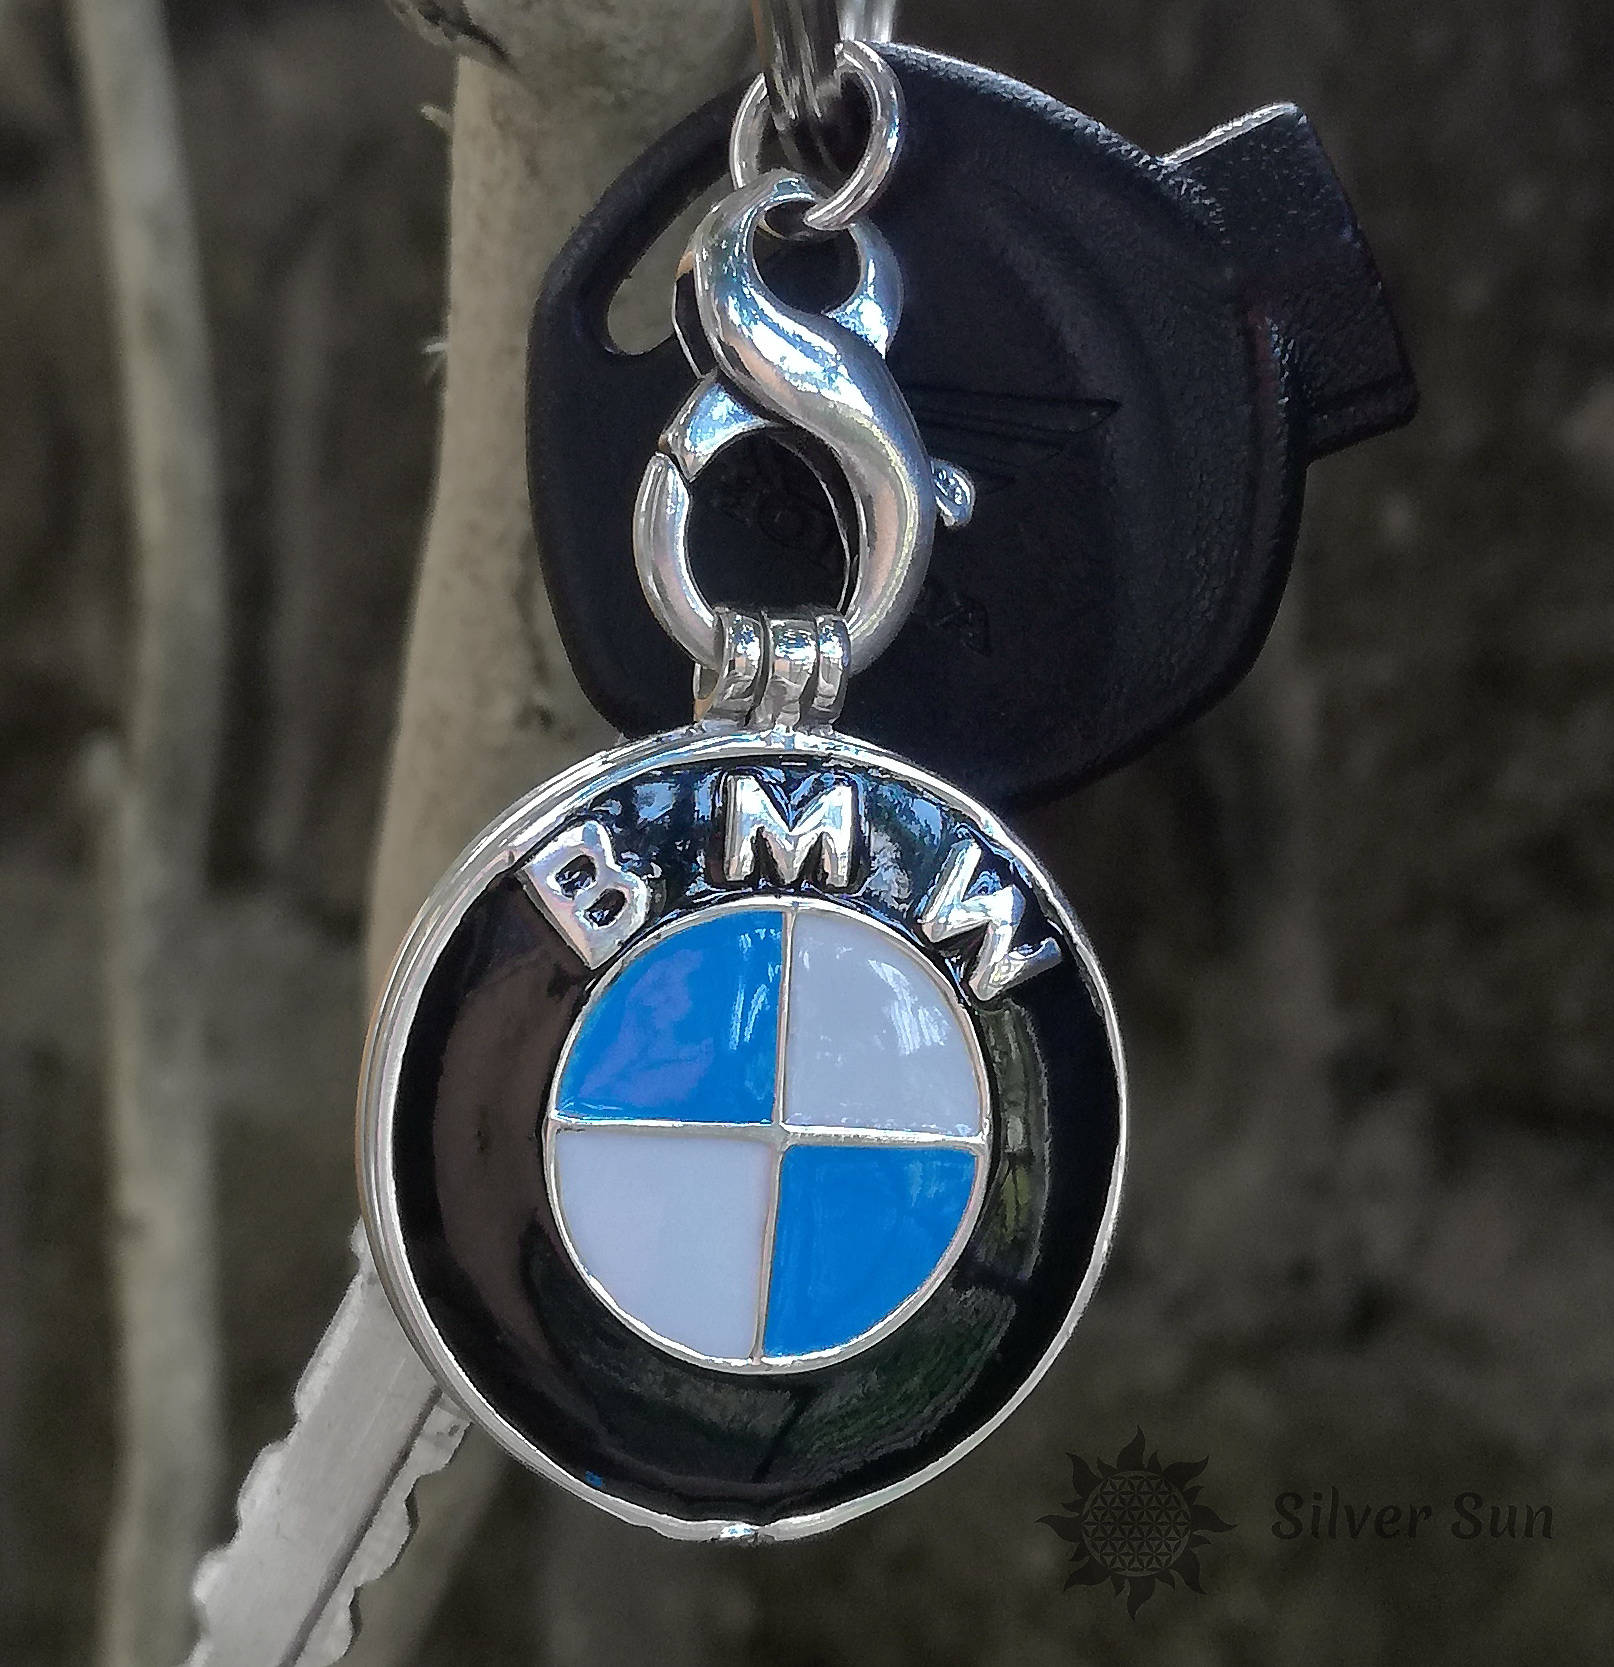 BaliSilverSun Keychain BMW with Secret It Opens Sterling Silver Enamel Steel Ring Includes Branded Packaging Silver Sun Style Jewelry Design from Bali